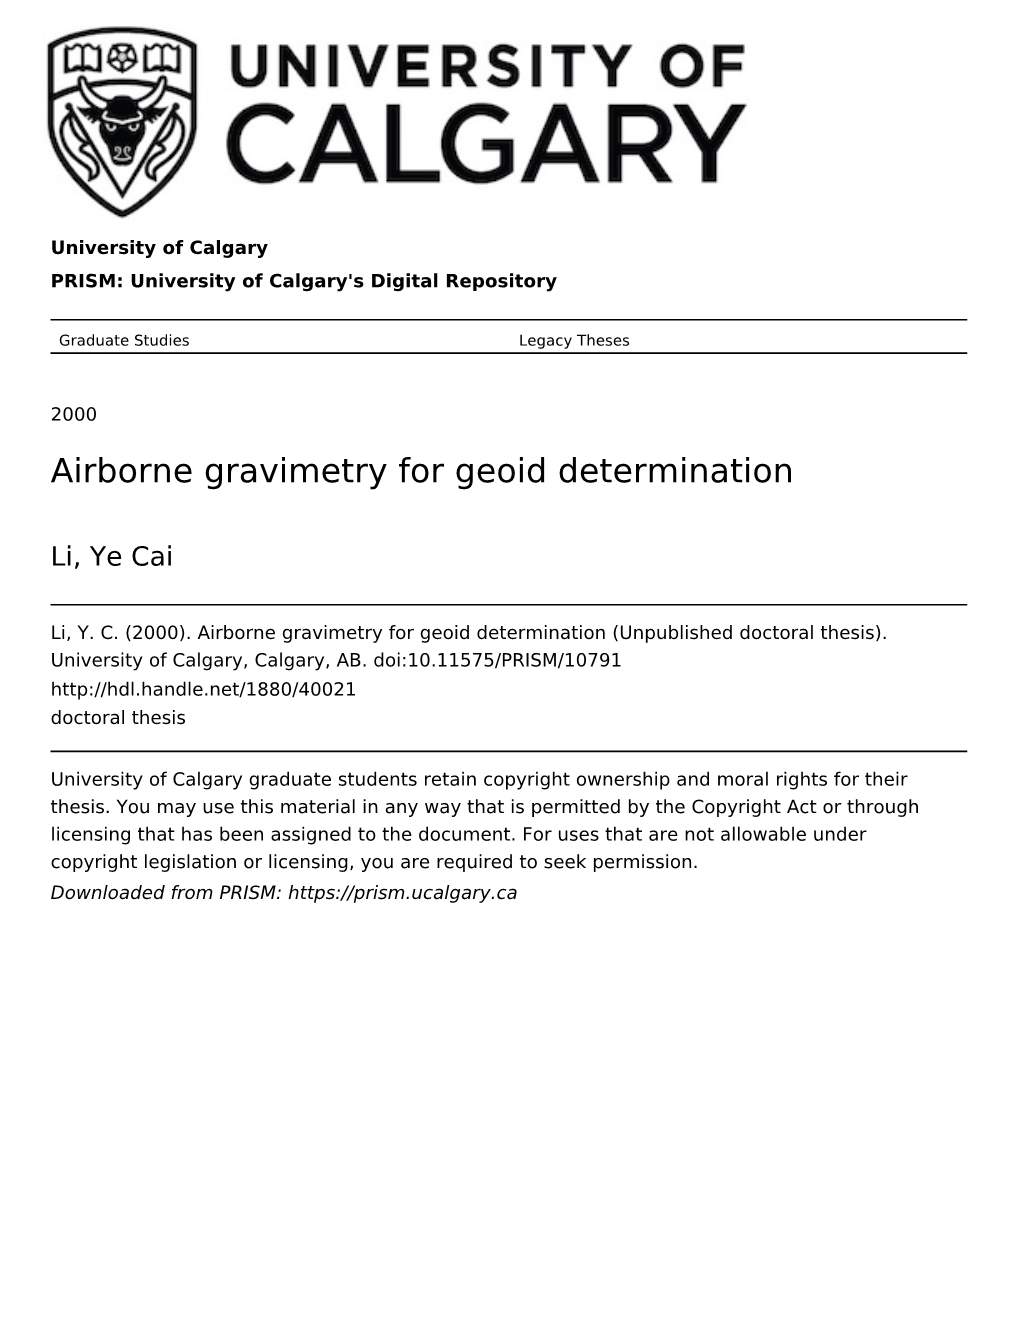 Airborne Gravimetry for Geoid Determination